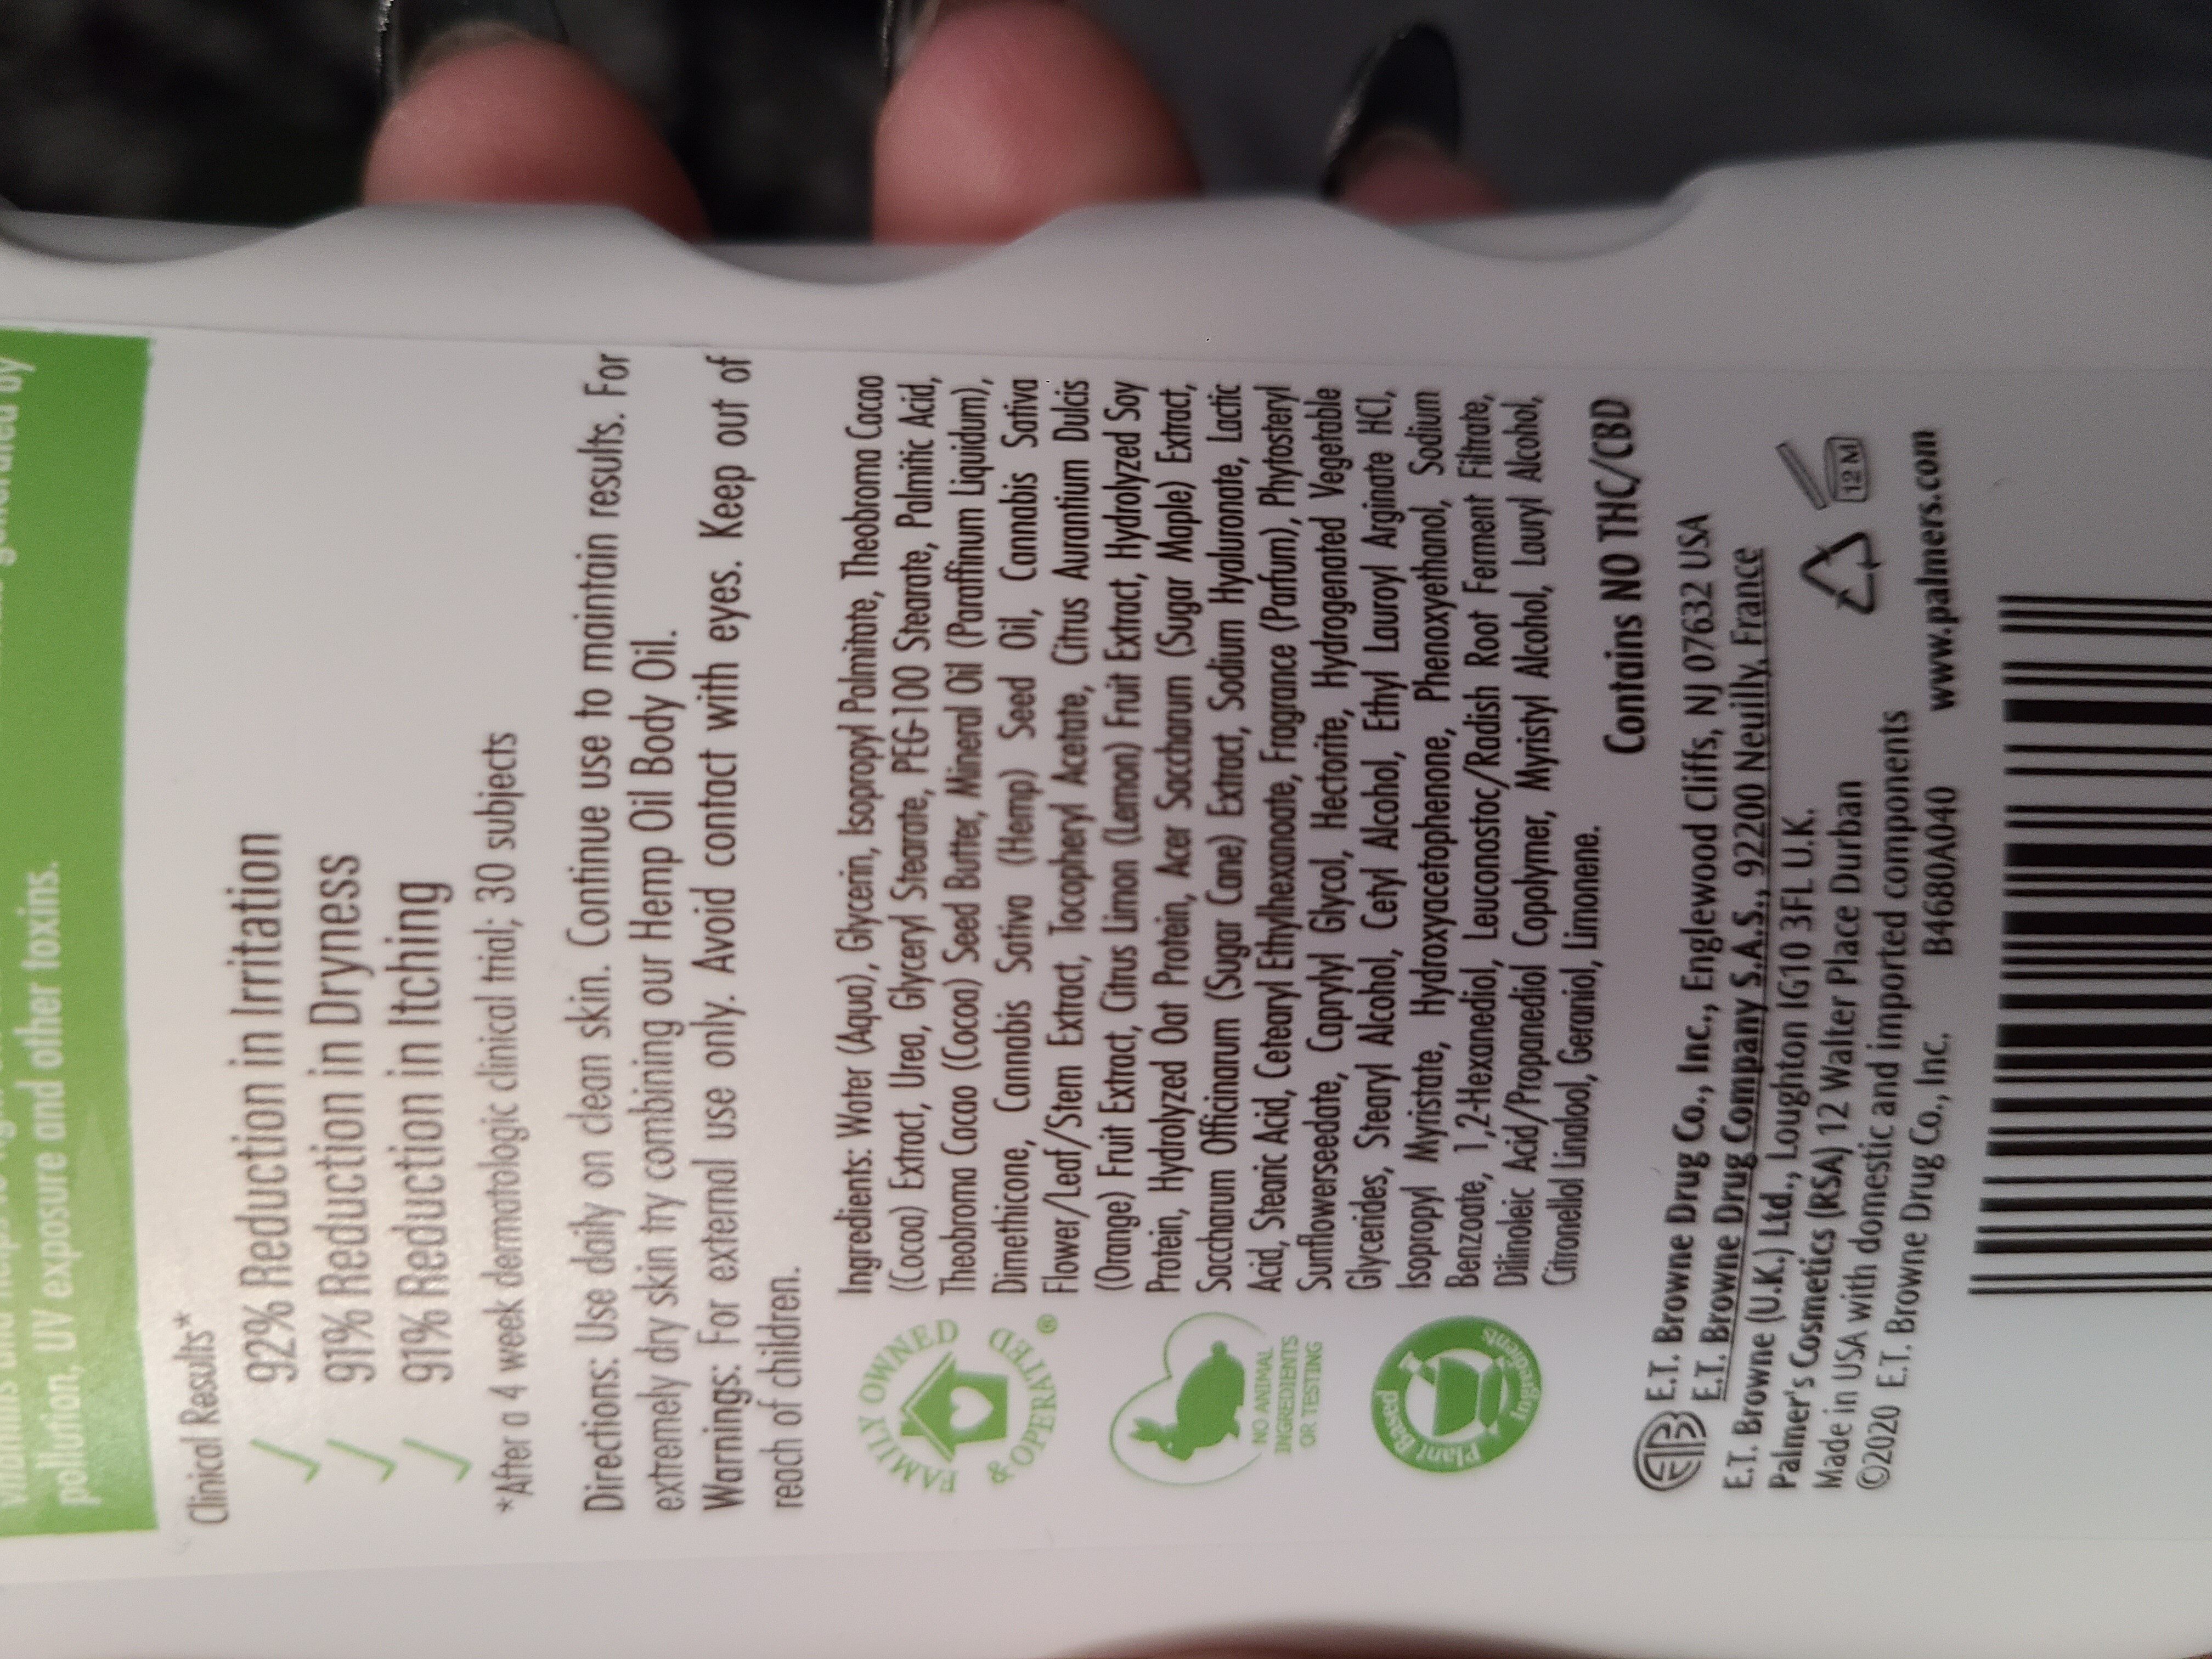 palmers hemp oil relief body lotion - Ingrédients - en